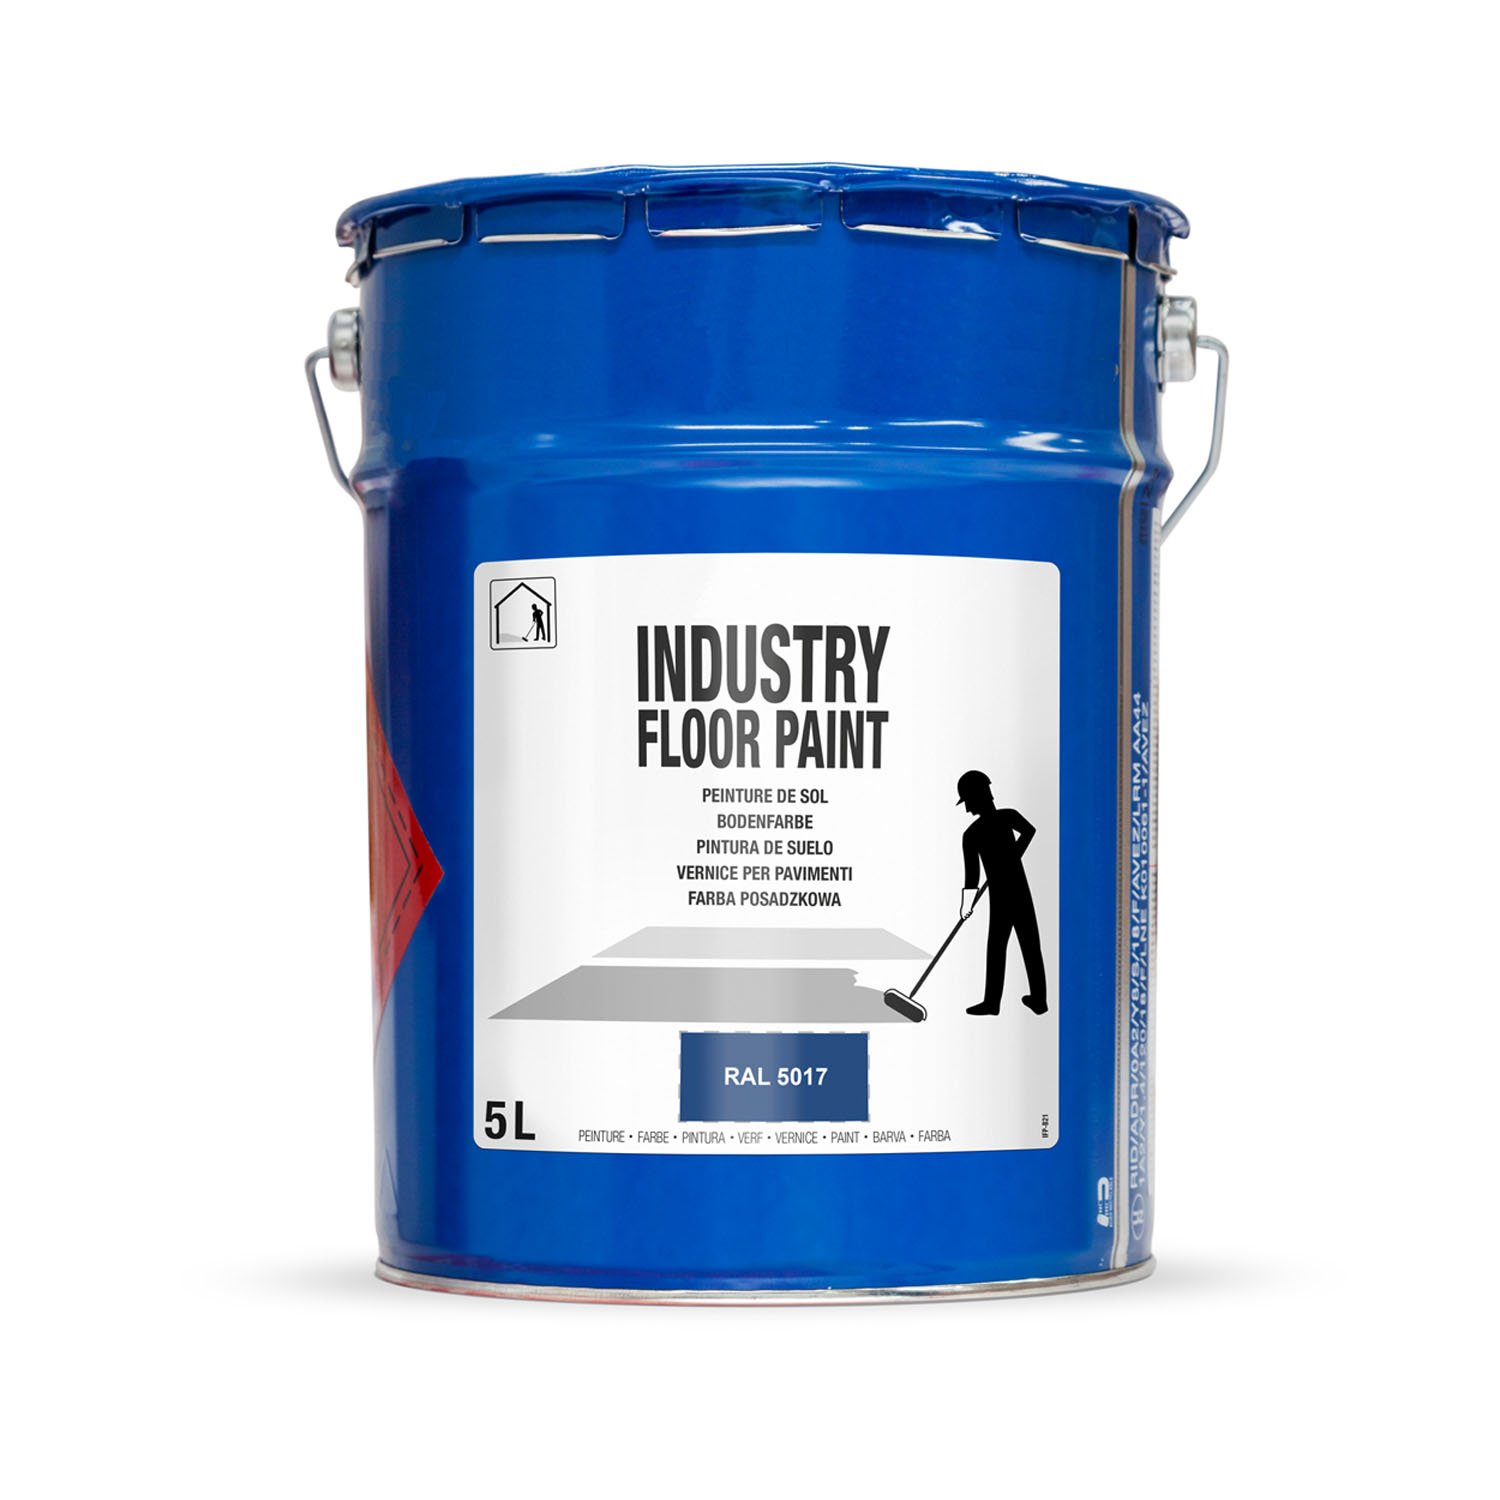 Modellbeispiel: Bodenmarkierungsfarbe -Industry Floor Paint- blau (Art. 41471.0001)